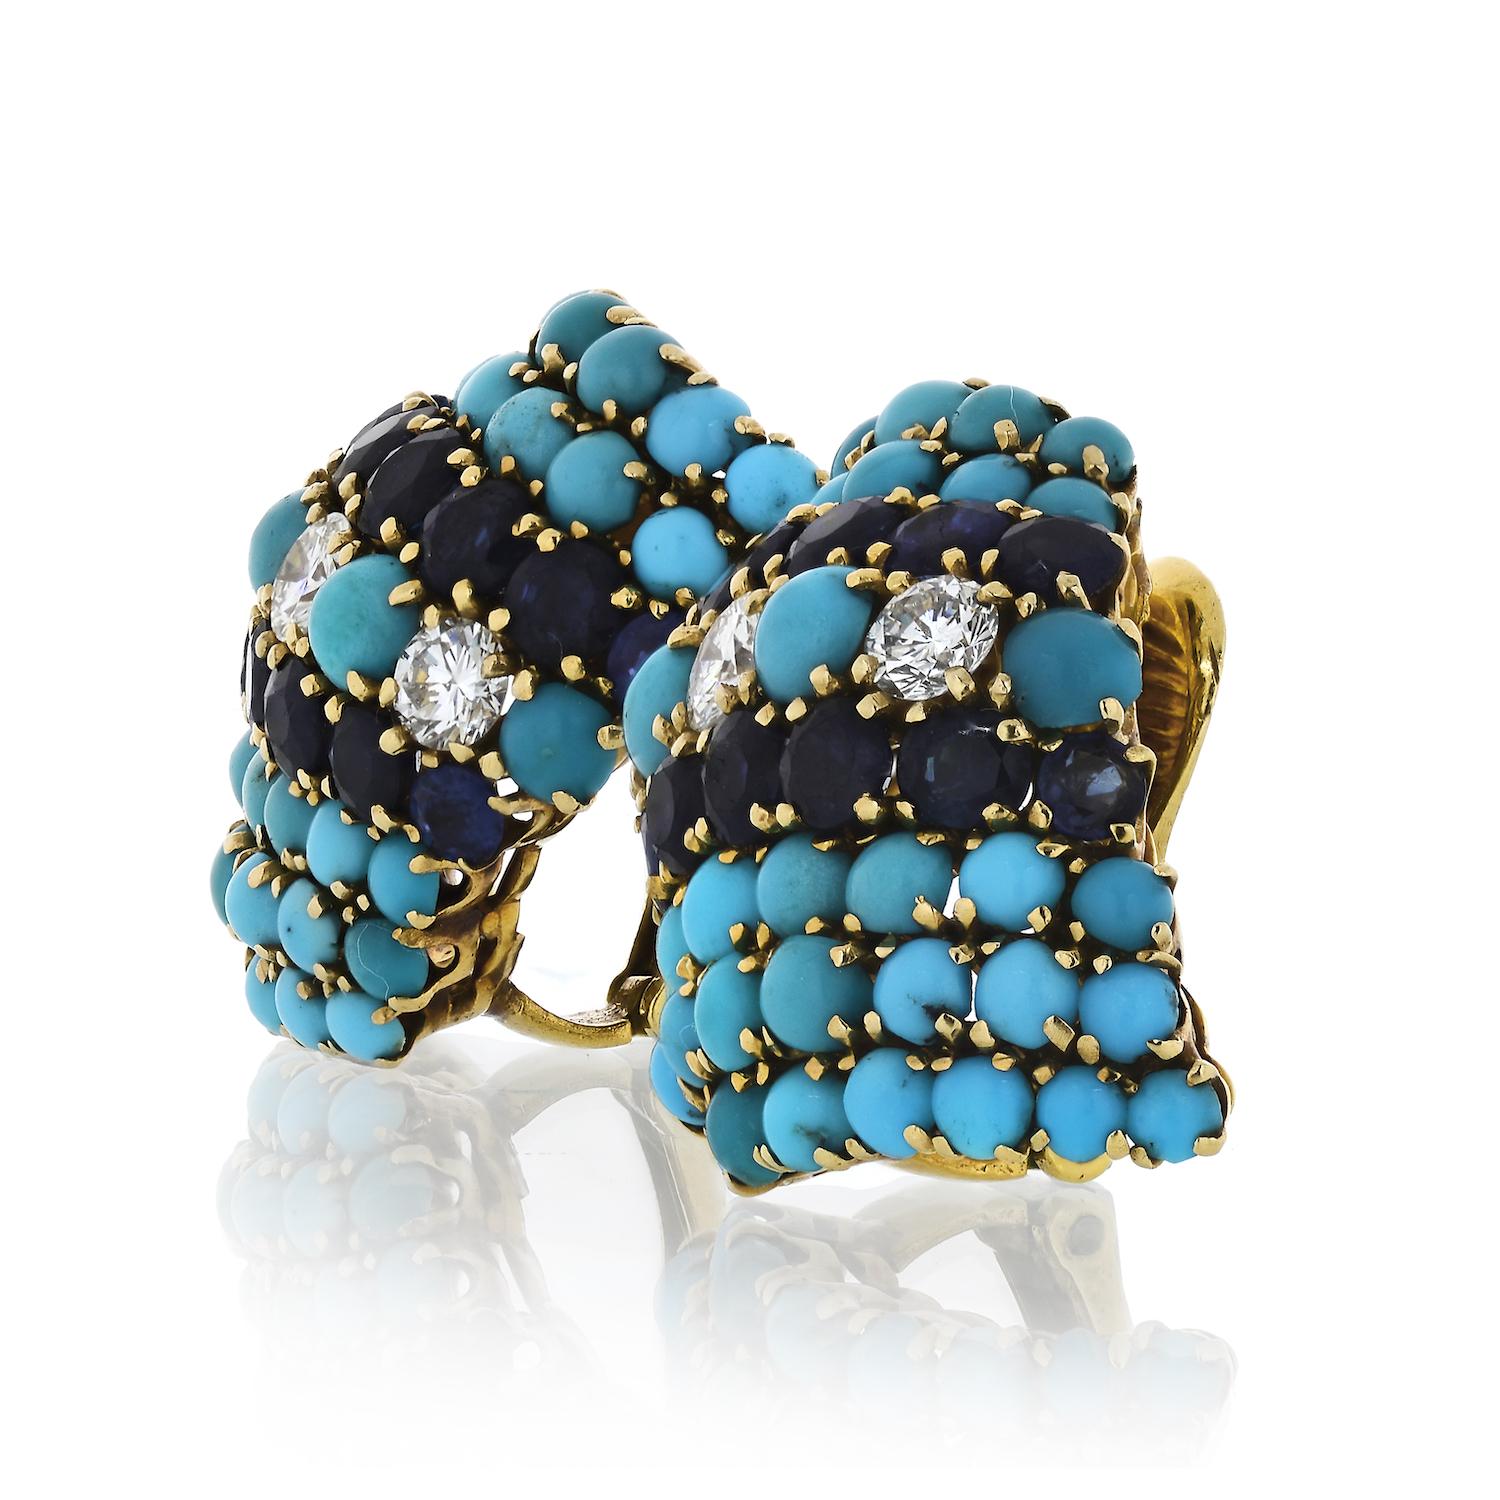 Turquoise, sapphire, and diamond clip-on earrings by David Webb.
WEBB 18K, 14K.
L: 1 inch
W: 0.75 inch